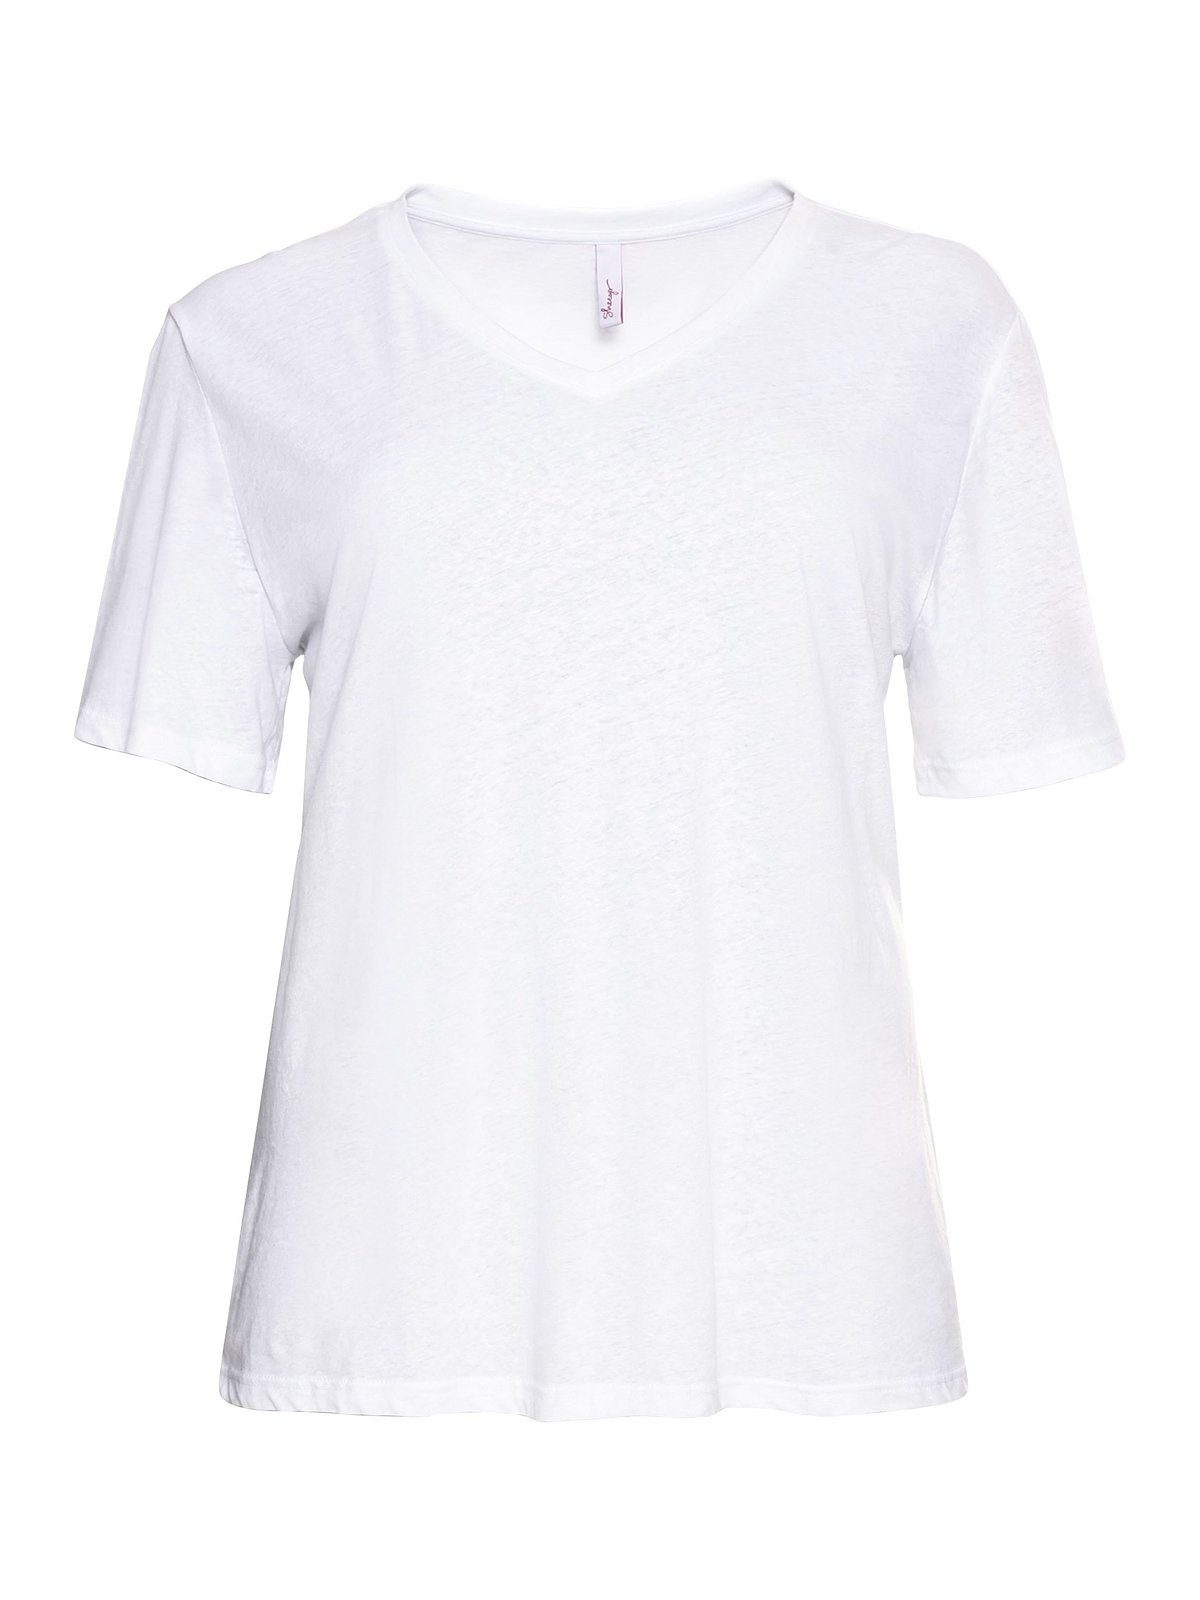 Sheego T-Shirt Große edlem Größen weiß aus Leinen-Viskose-Mix